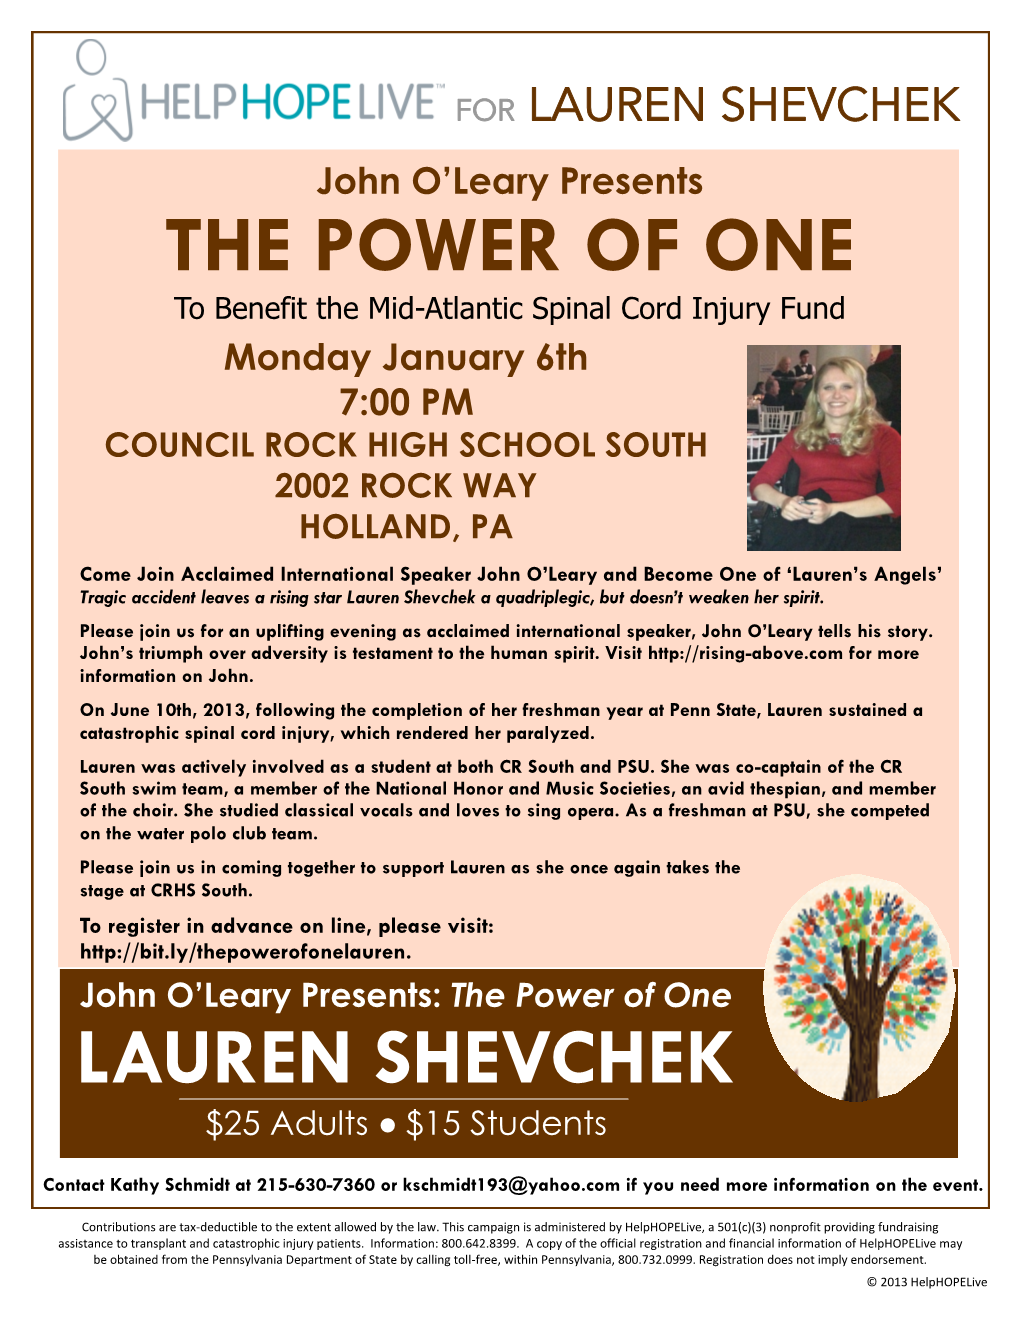 The Power of One LAUREN SHEVCHEK $25 Adults ● $15 Students